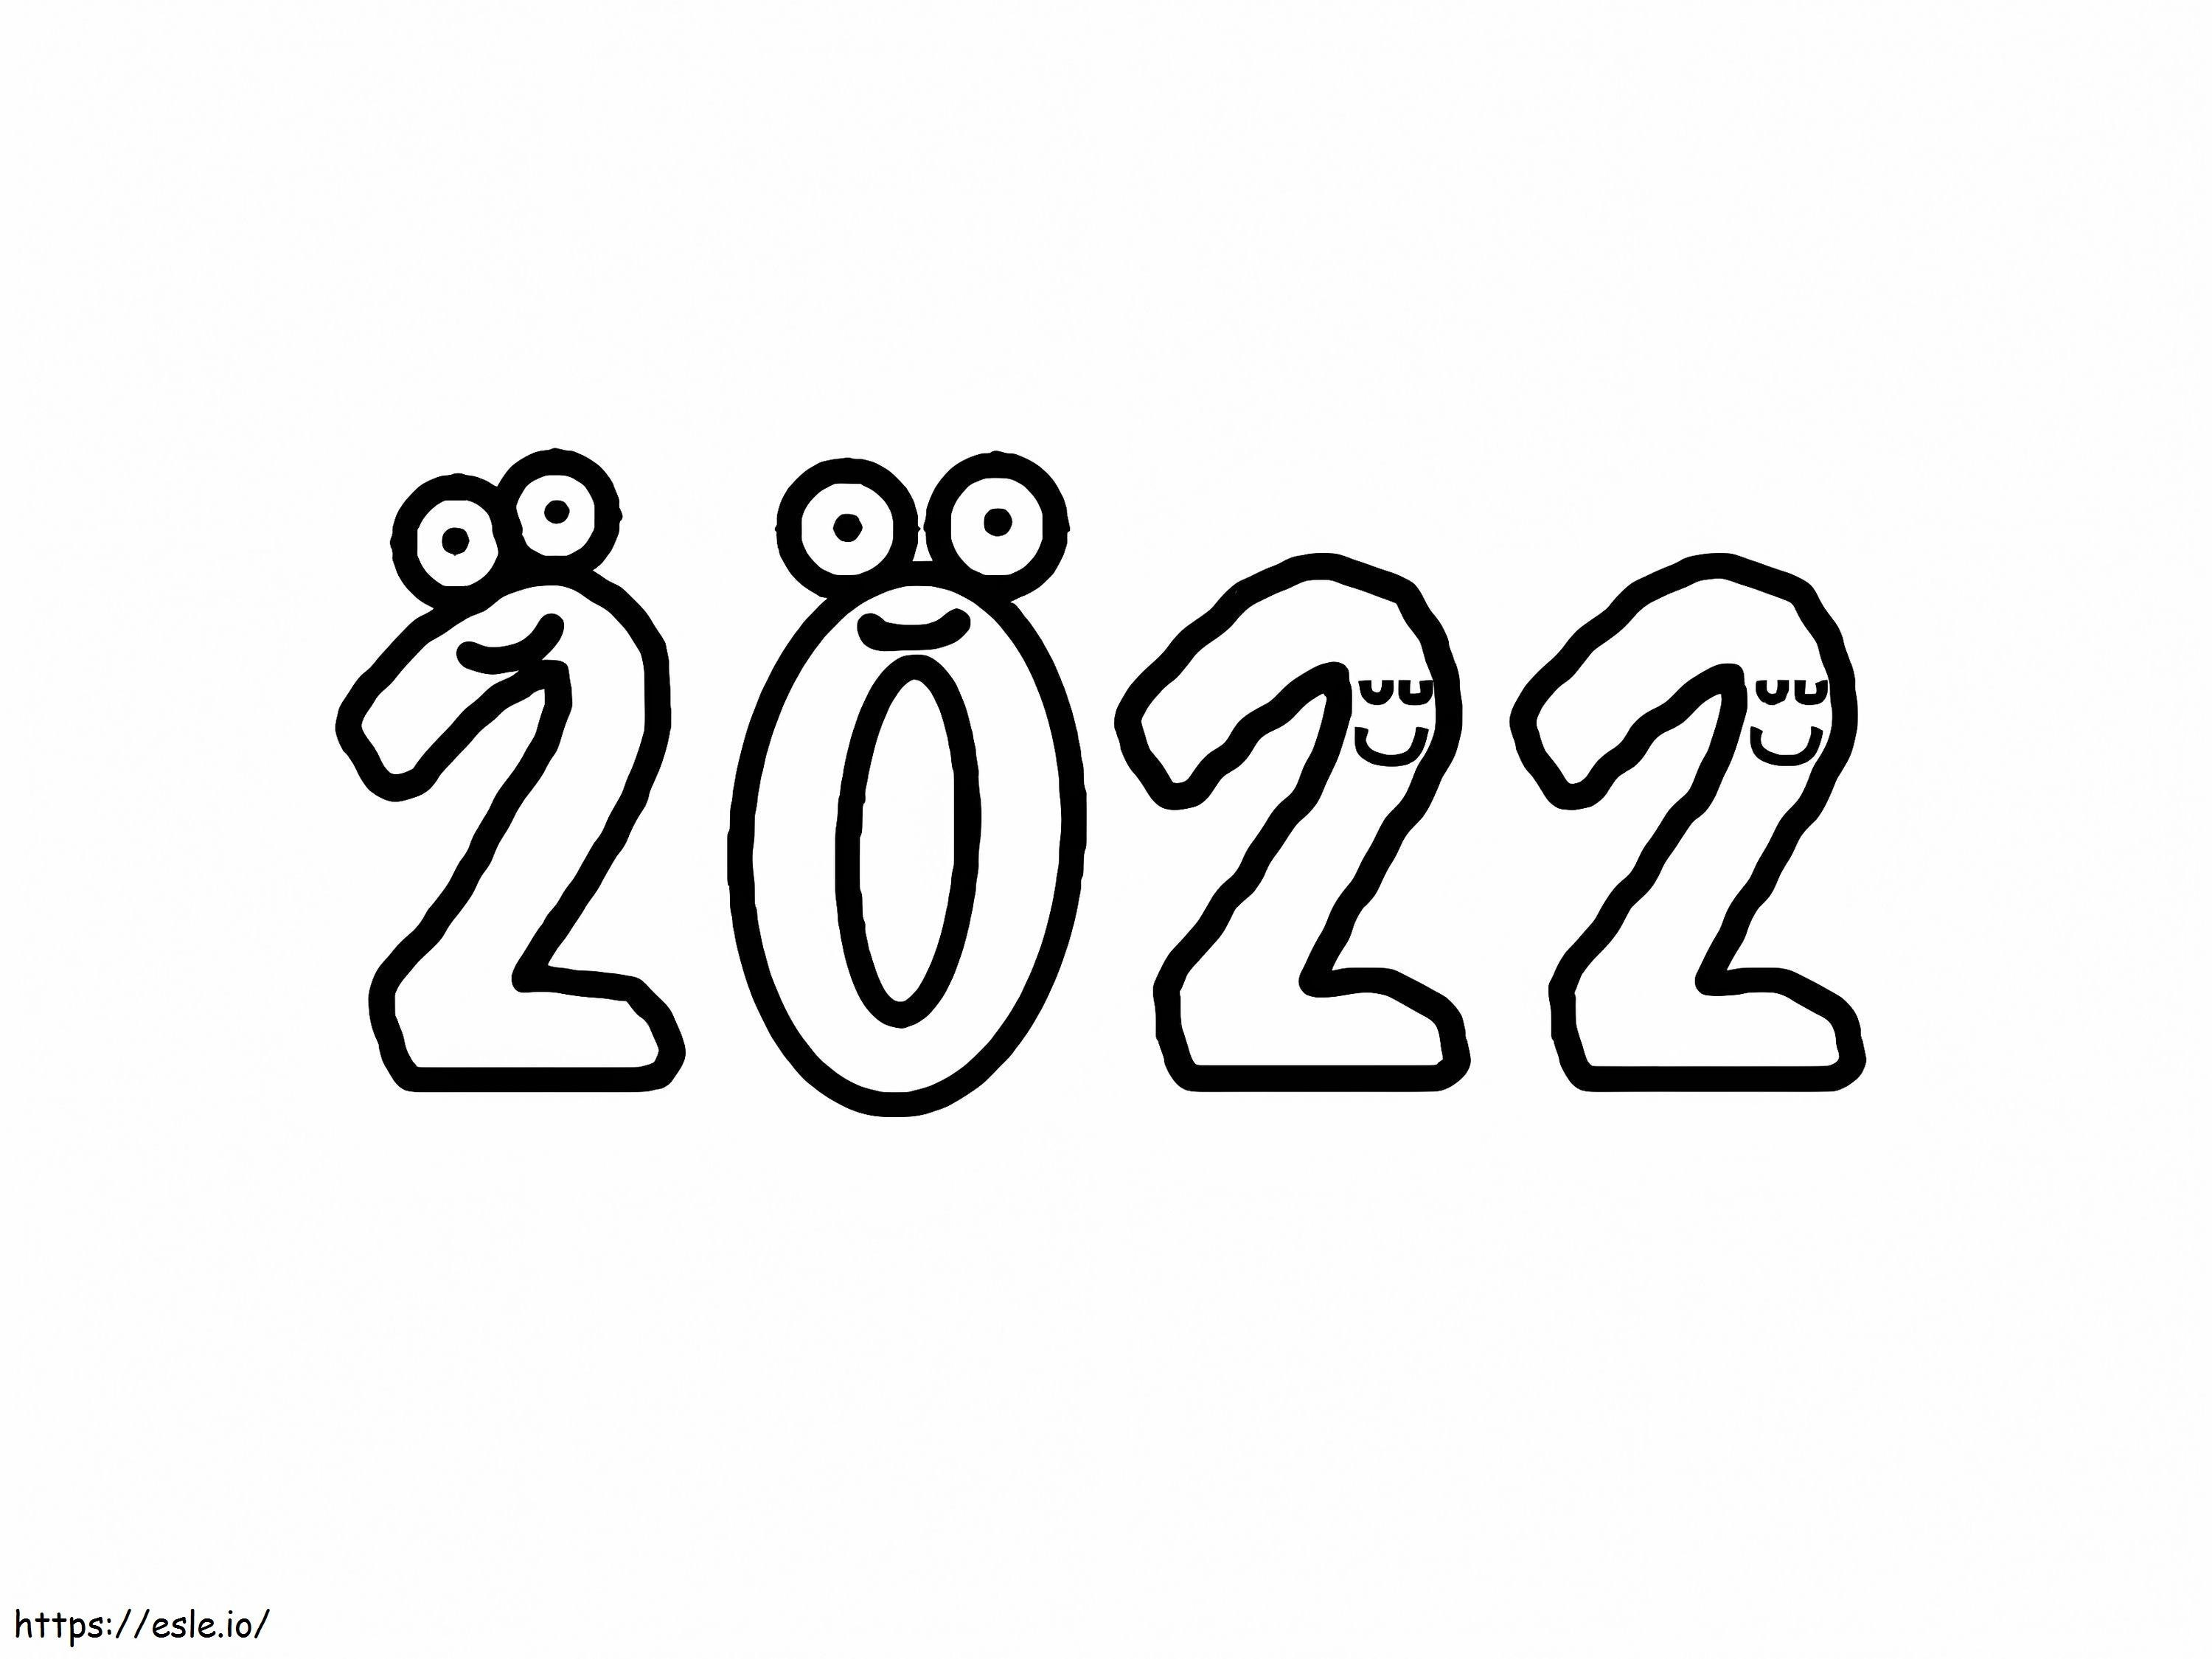 Nowy Rok 2022 kolorowanka